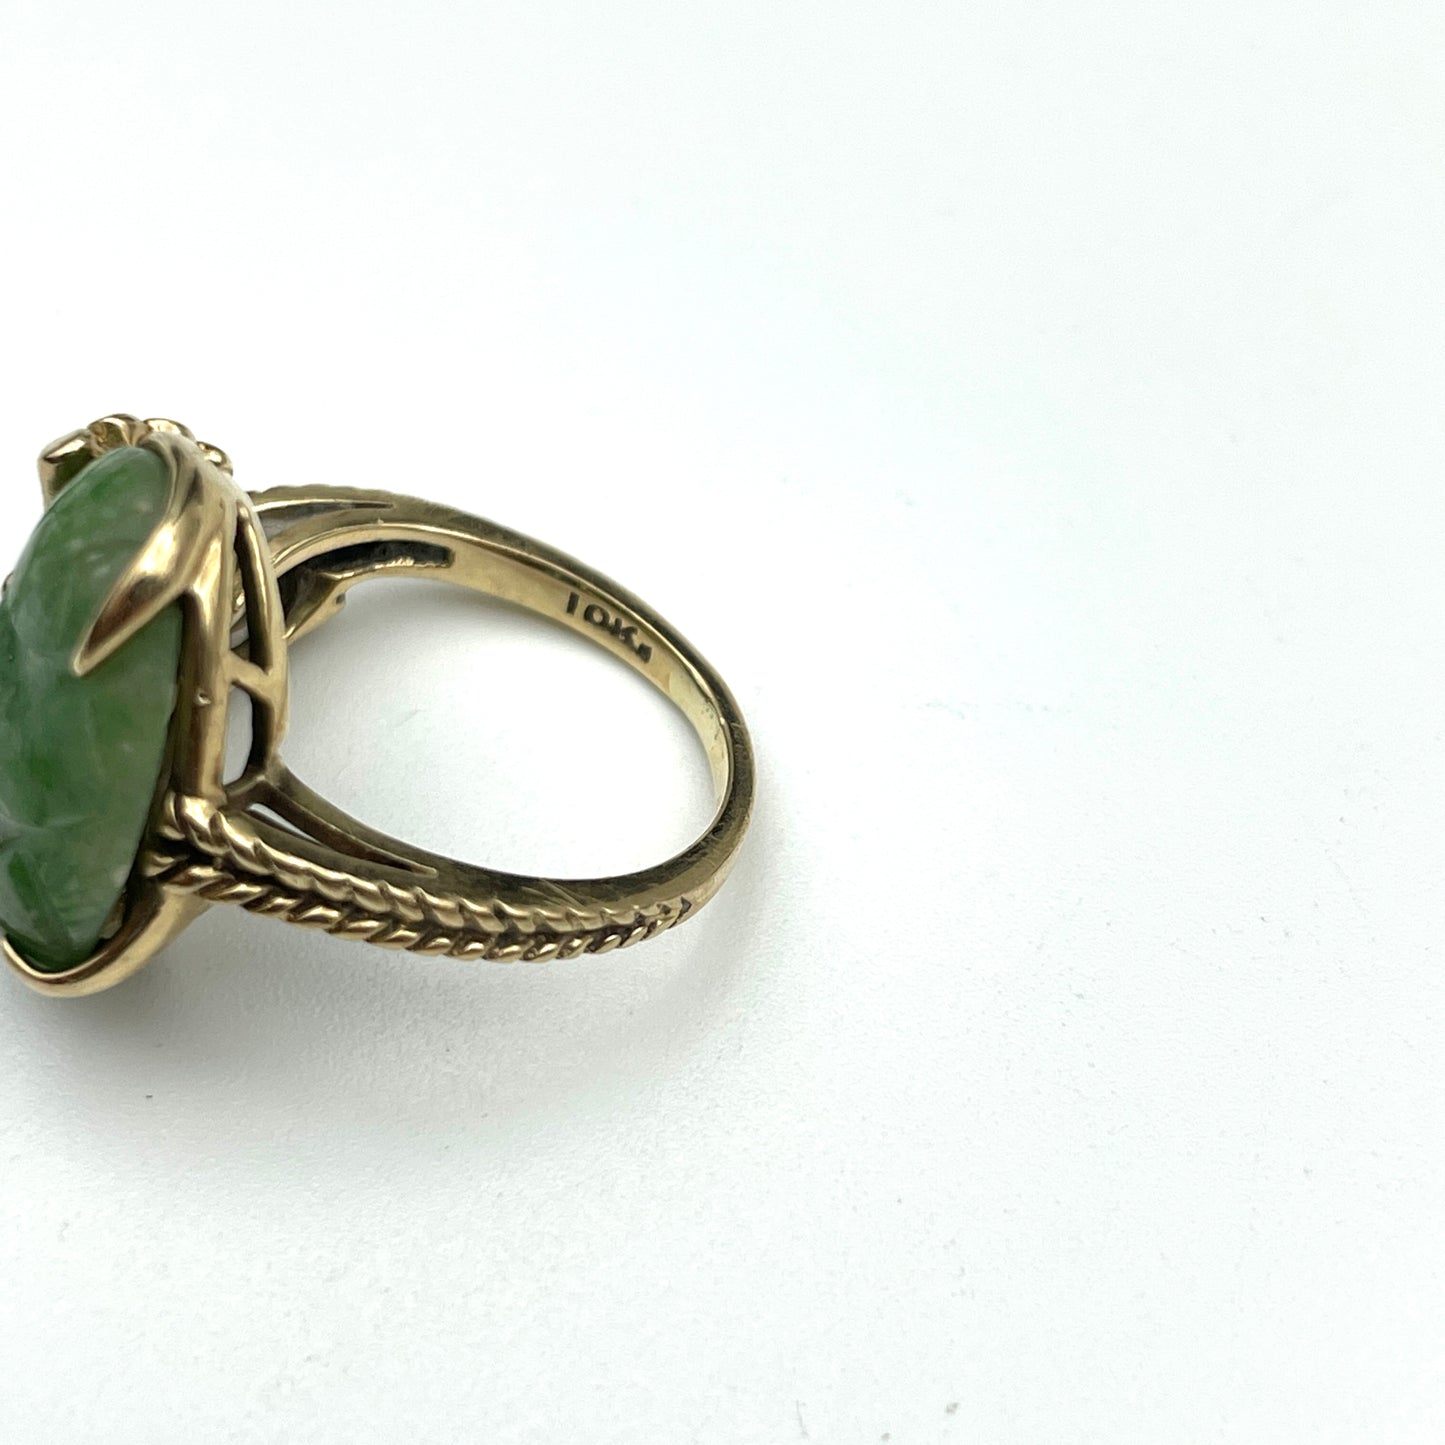 Vintage 10K Gold Ring with Carved Jade - Size 5